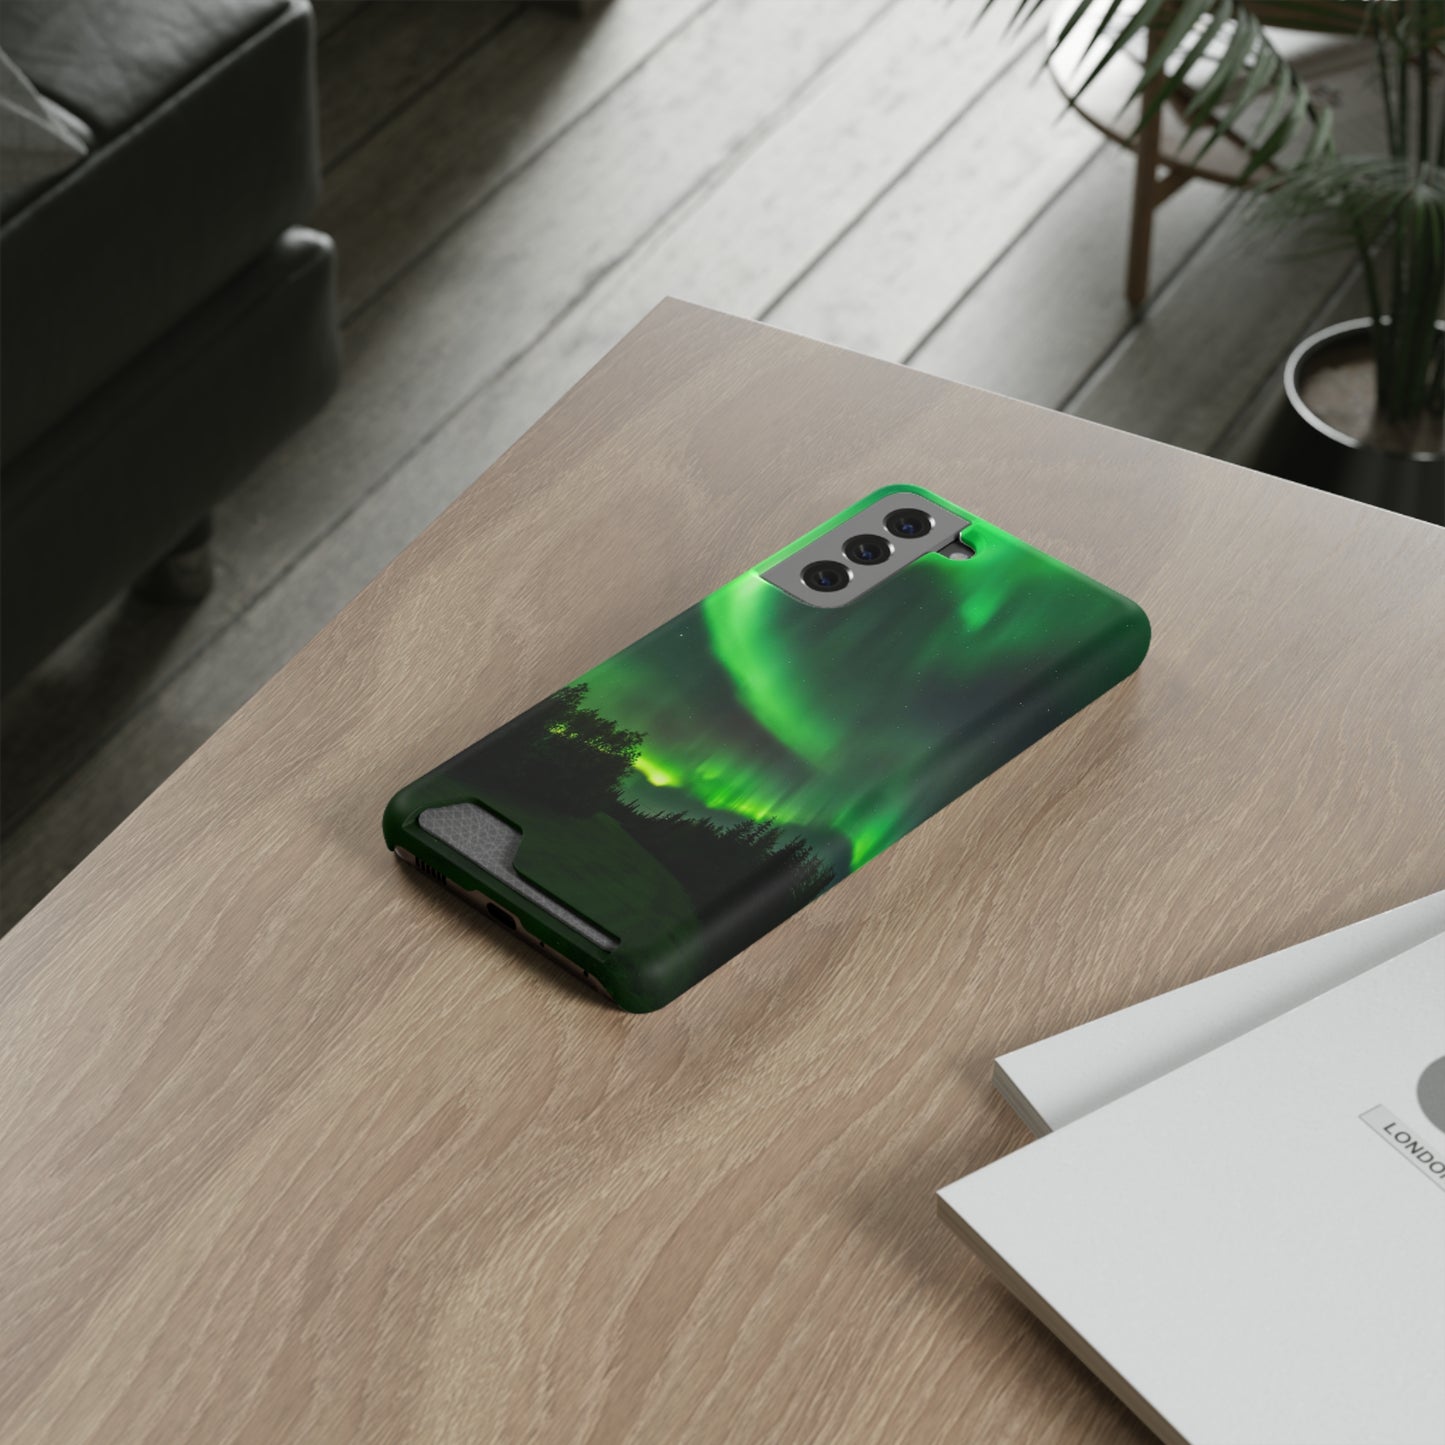 Aurora Borealis Phone Case With Card Holder